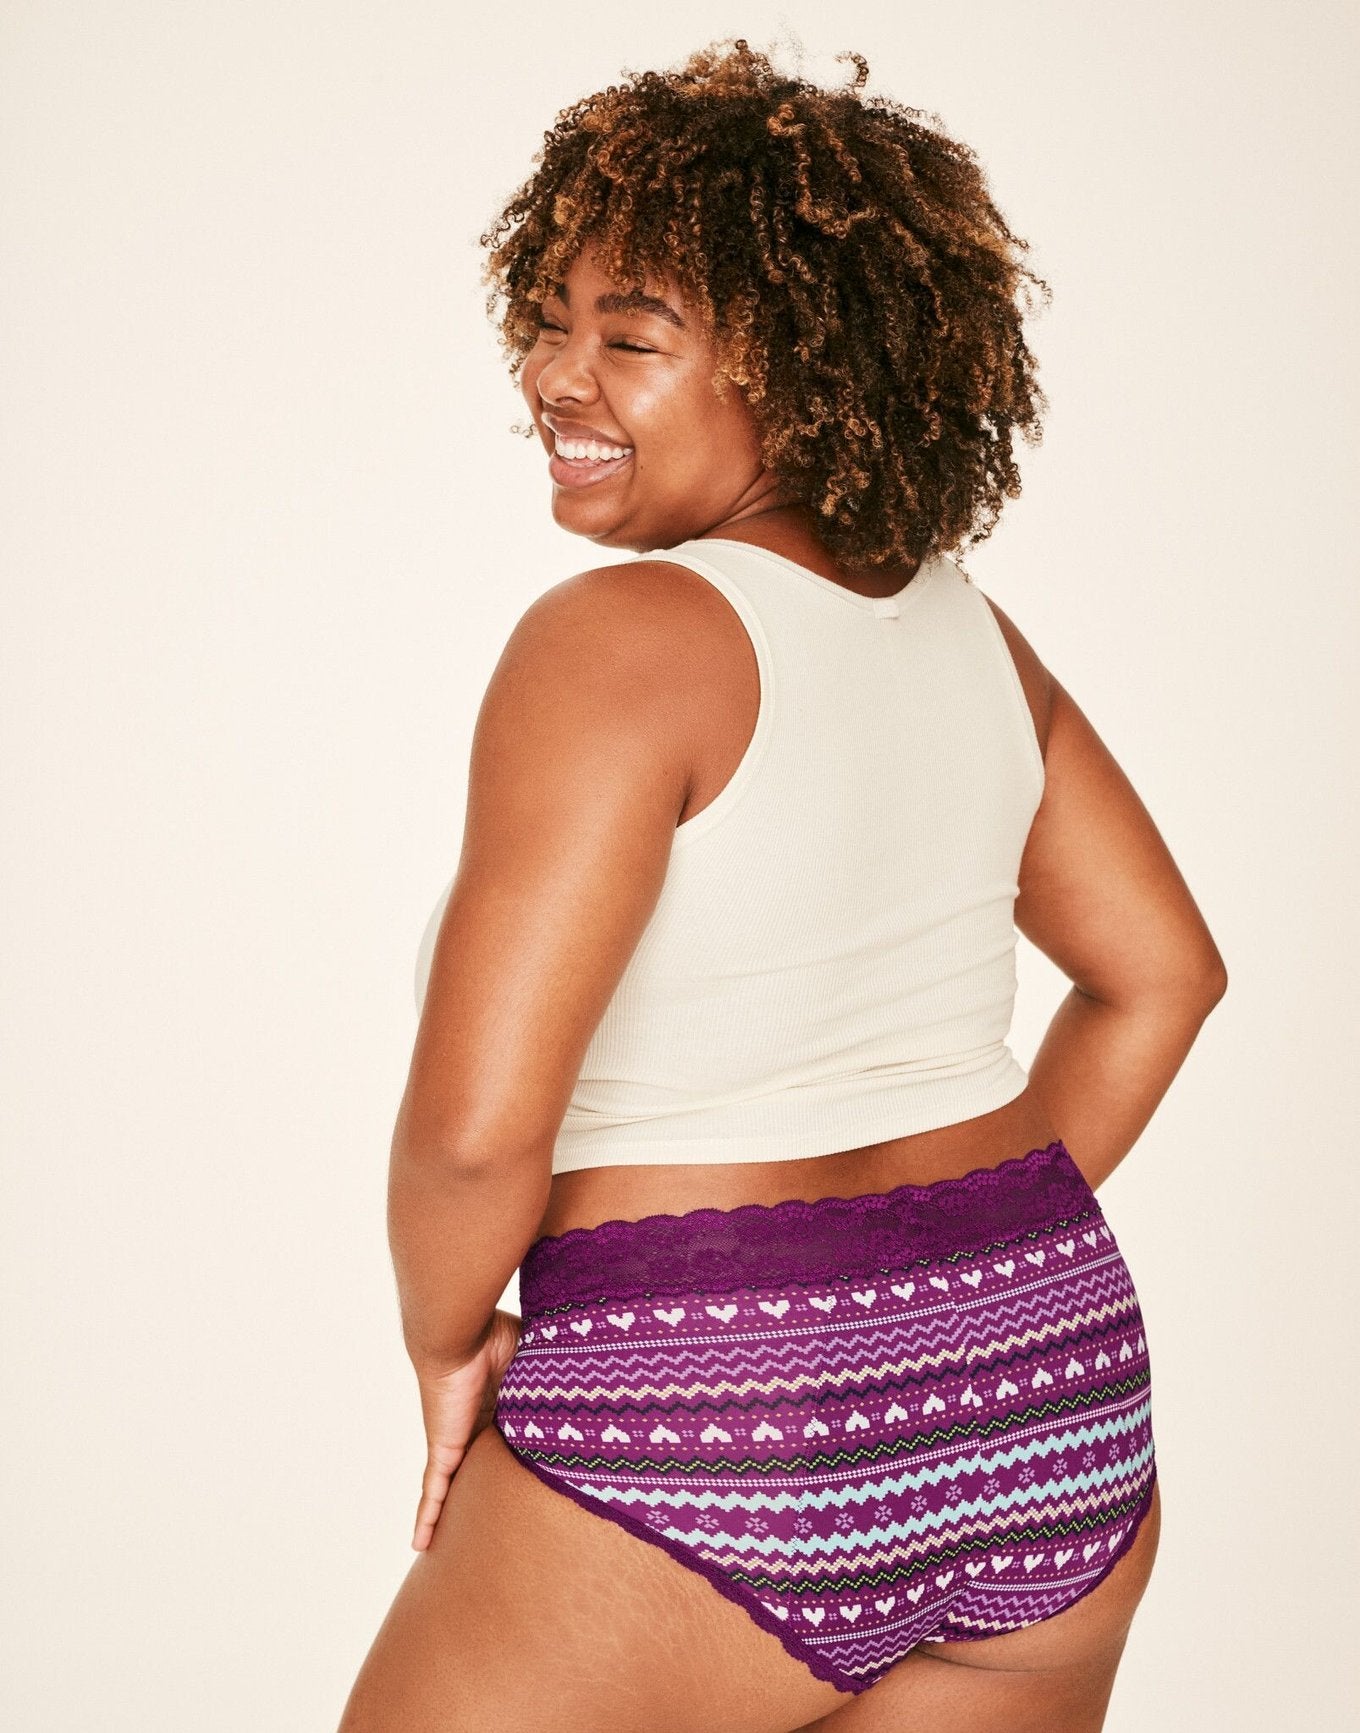 Joyja Amelia period-proof panty in color Joyful Fair Isle C01 and shape high waisted